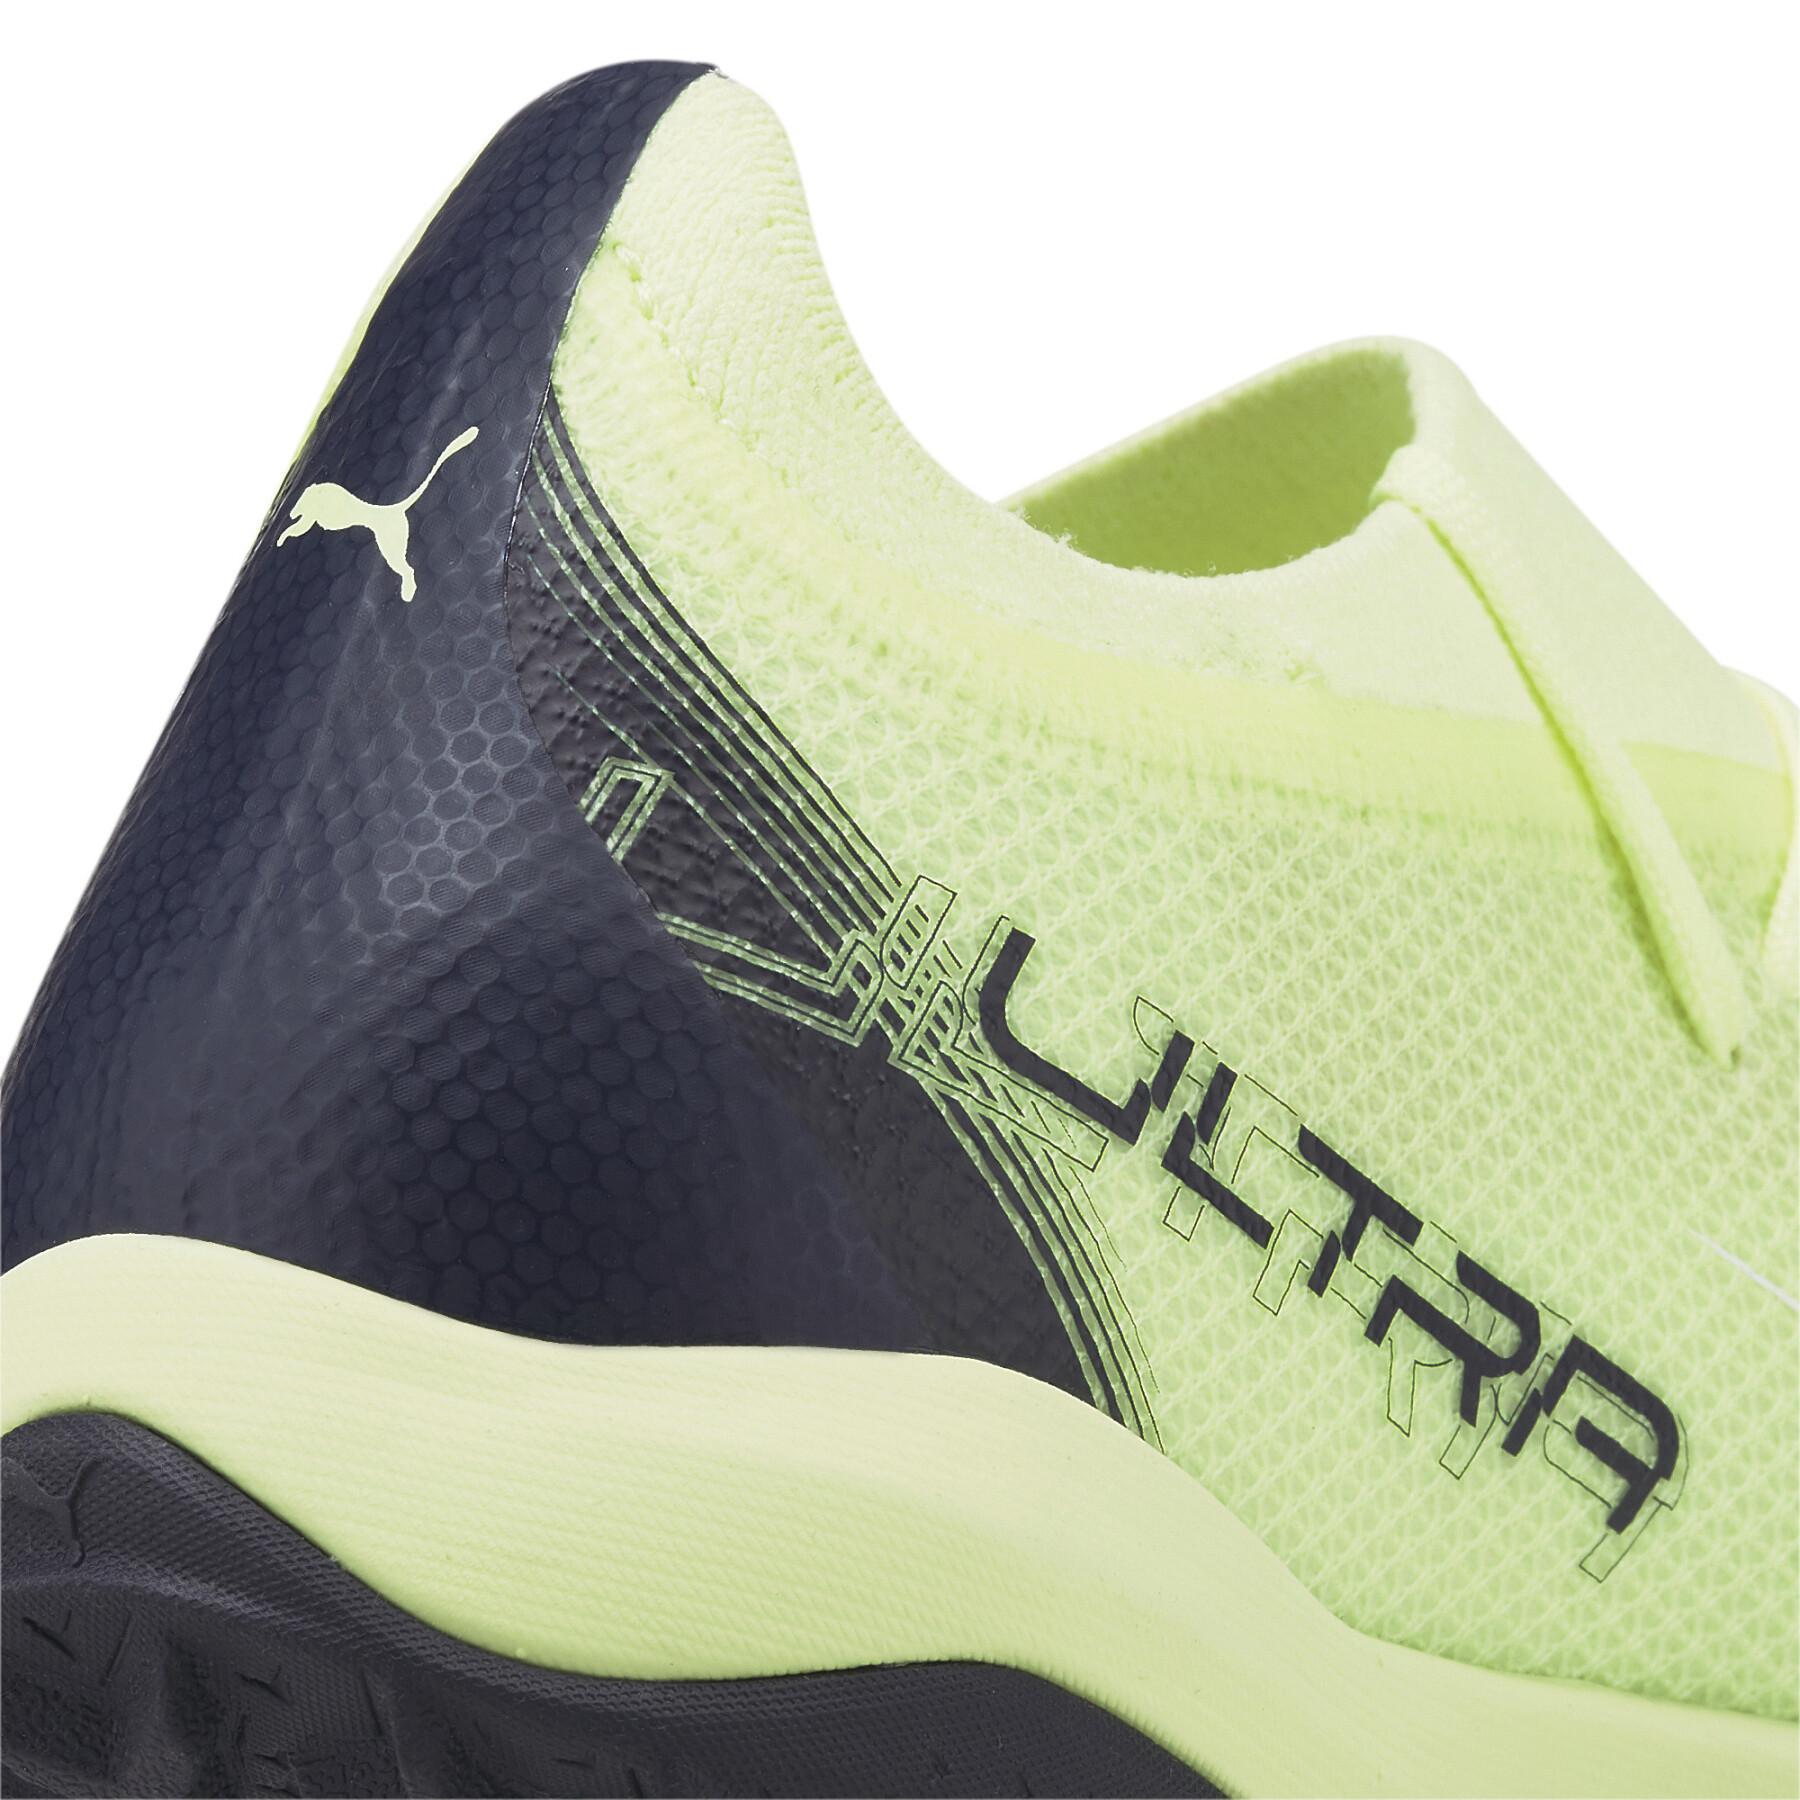 Soccer shoes Puma Ultra Match TT - Fastest Pack